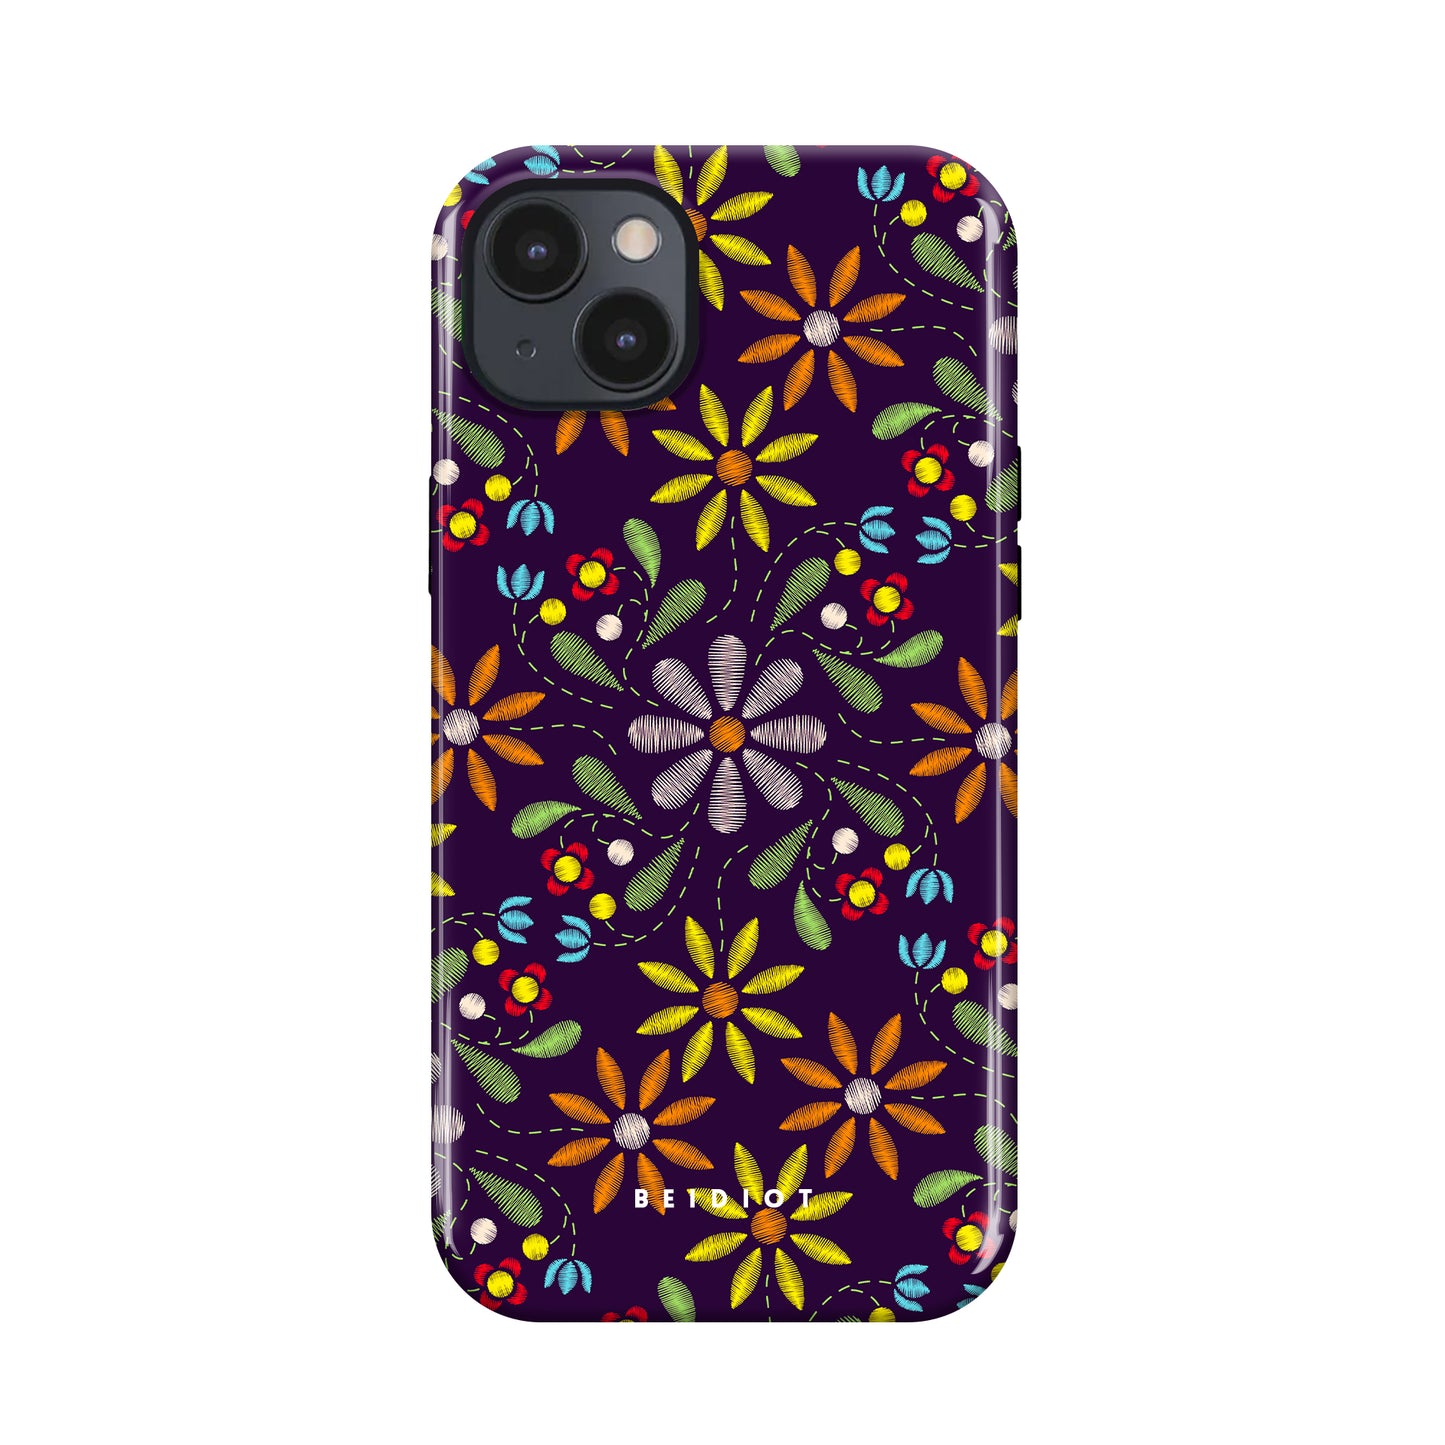 Blossom Stitch iPhone Case